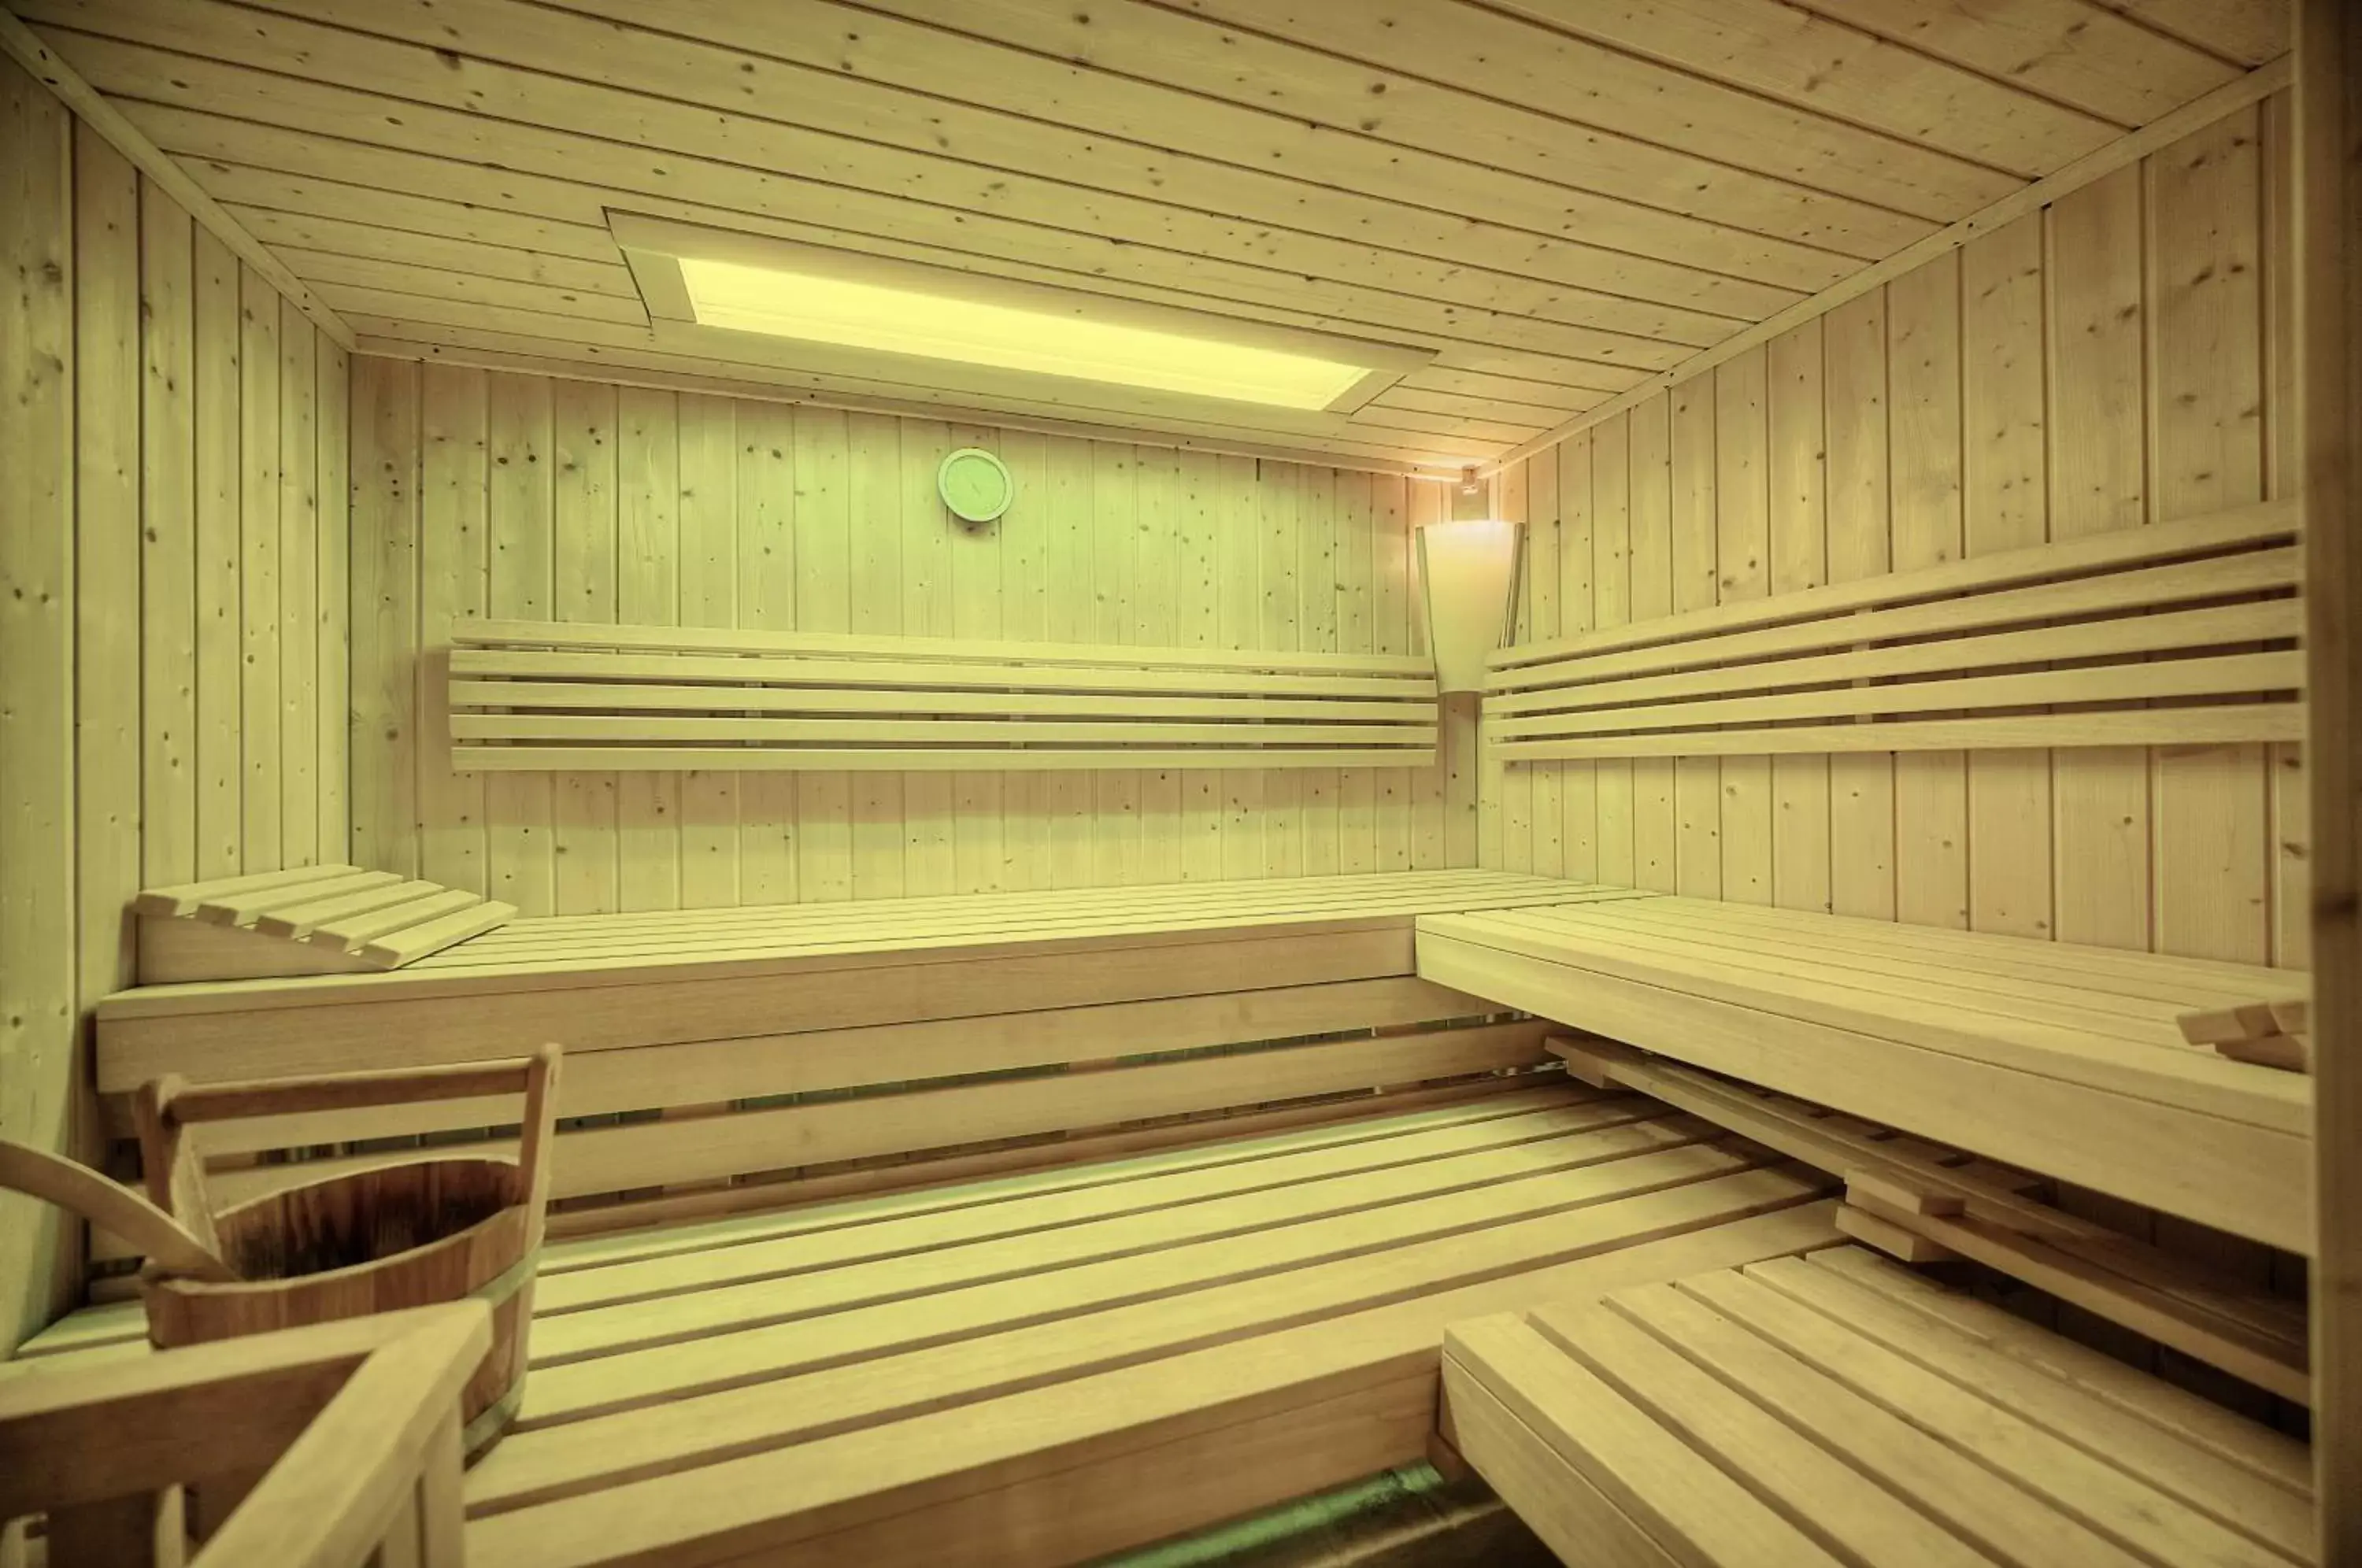 Sauna in Chambre d'hôte "HAVRE DE PAIX" Prestige jacuzzi, hammam, sauna, PISCINE Mougins Cannes Grasse